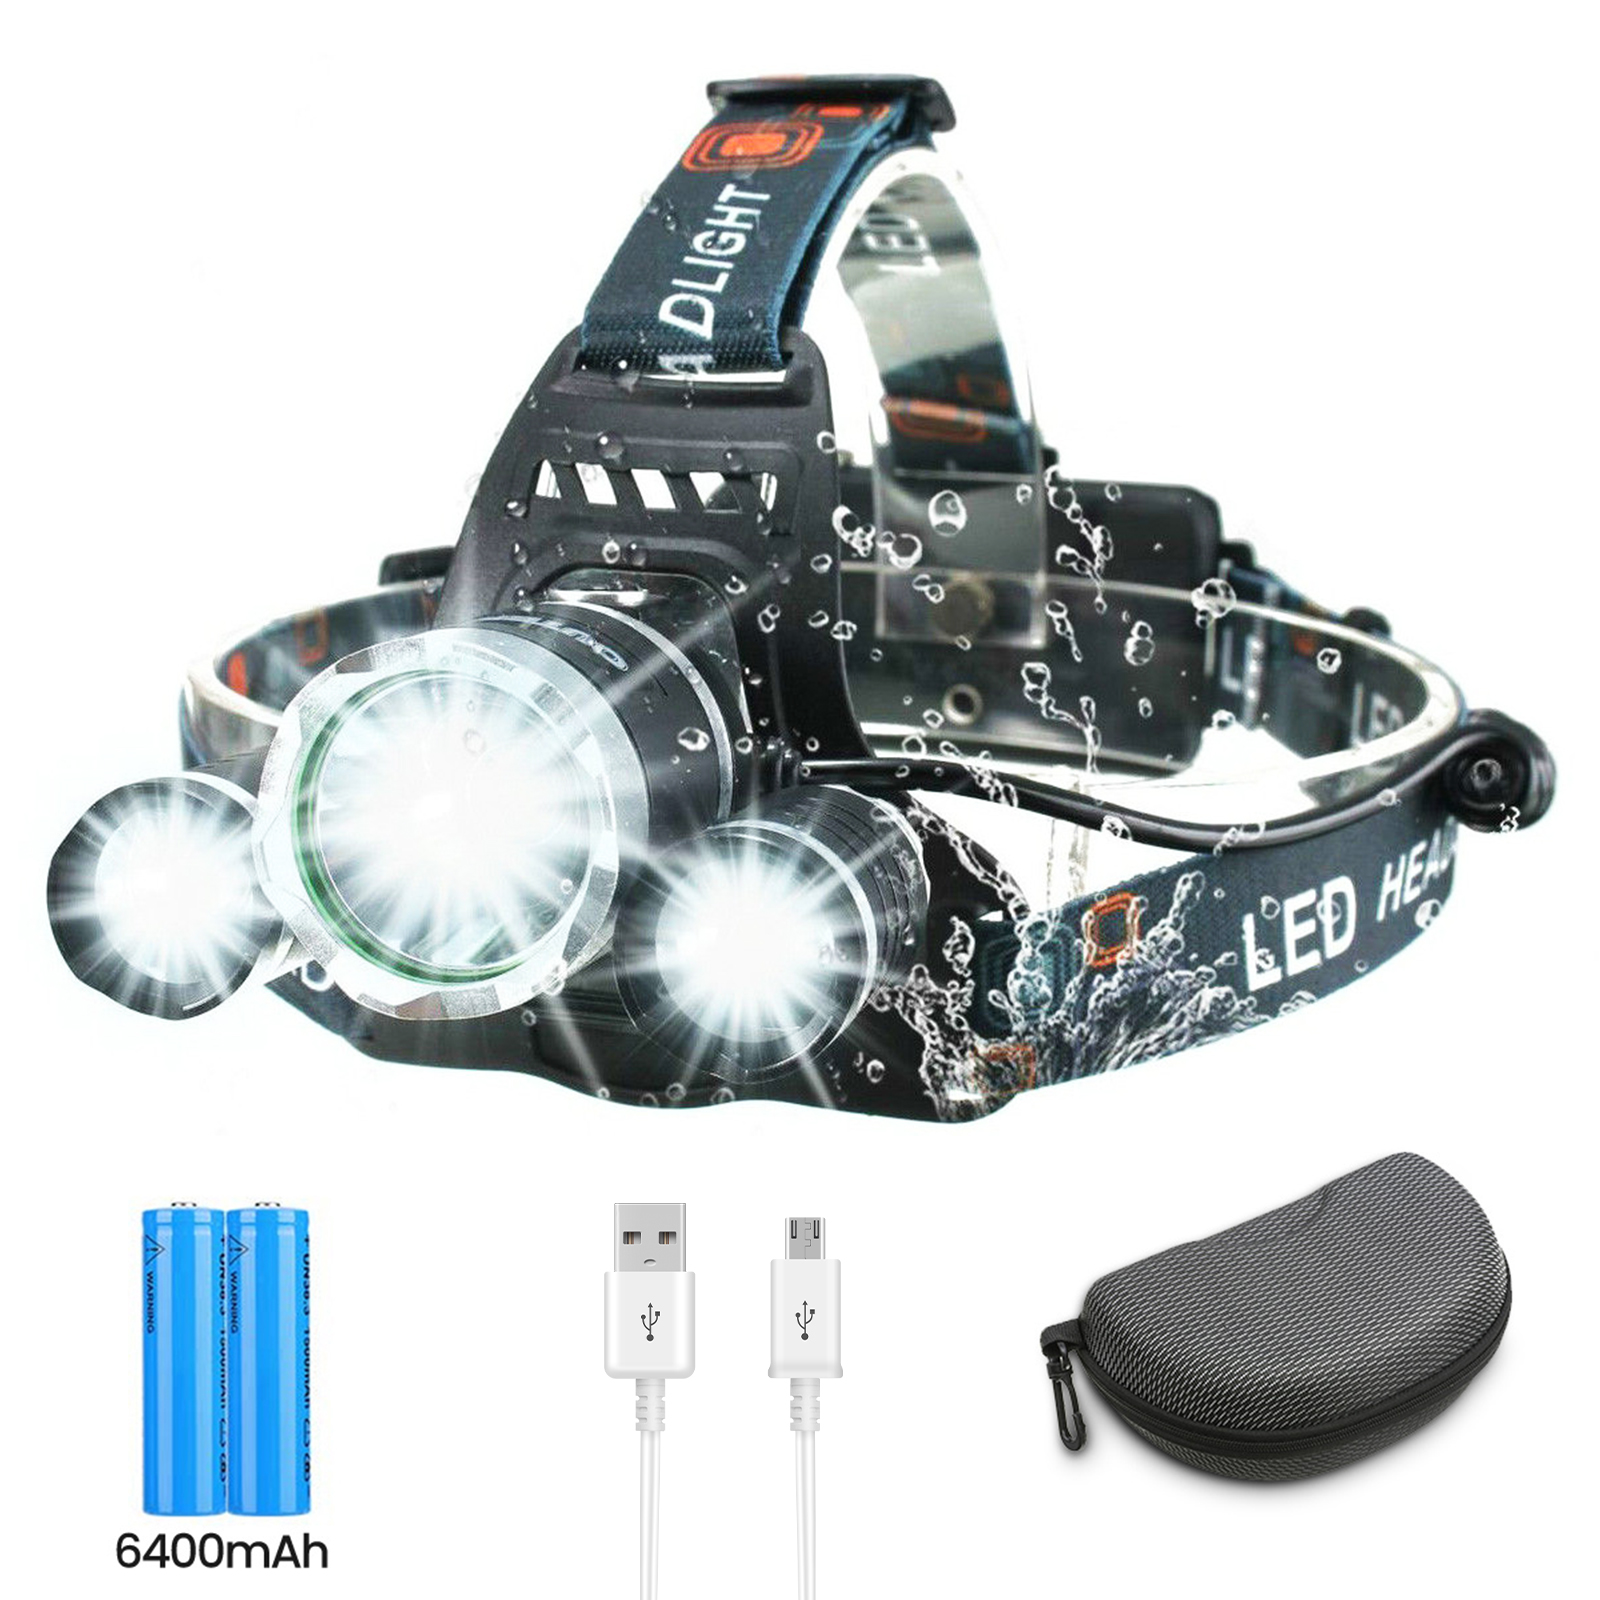 OUTERDO-USB-Rechargeable-Headlamp-6400mAh-IP65-Waterproof-Outdoor-Headlight-4-Light-Modes-1893288-1